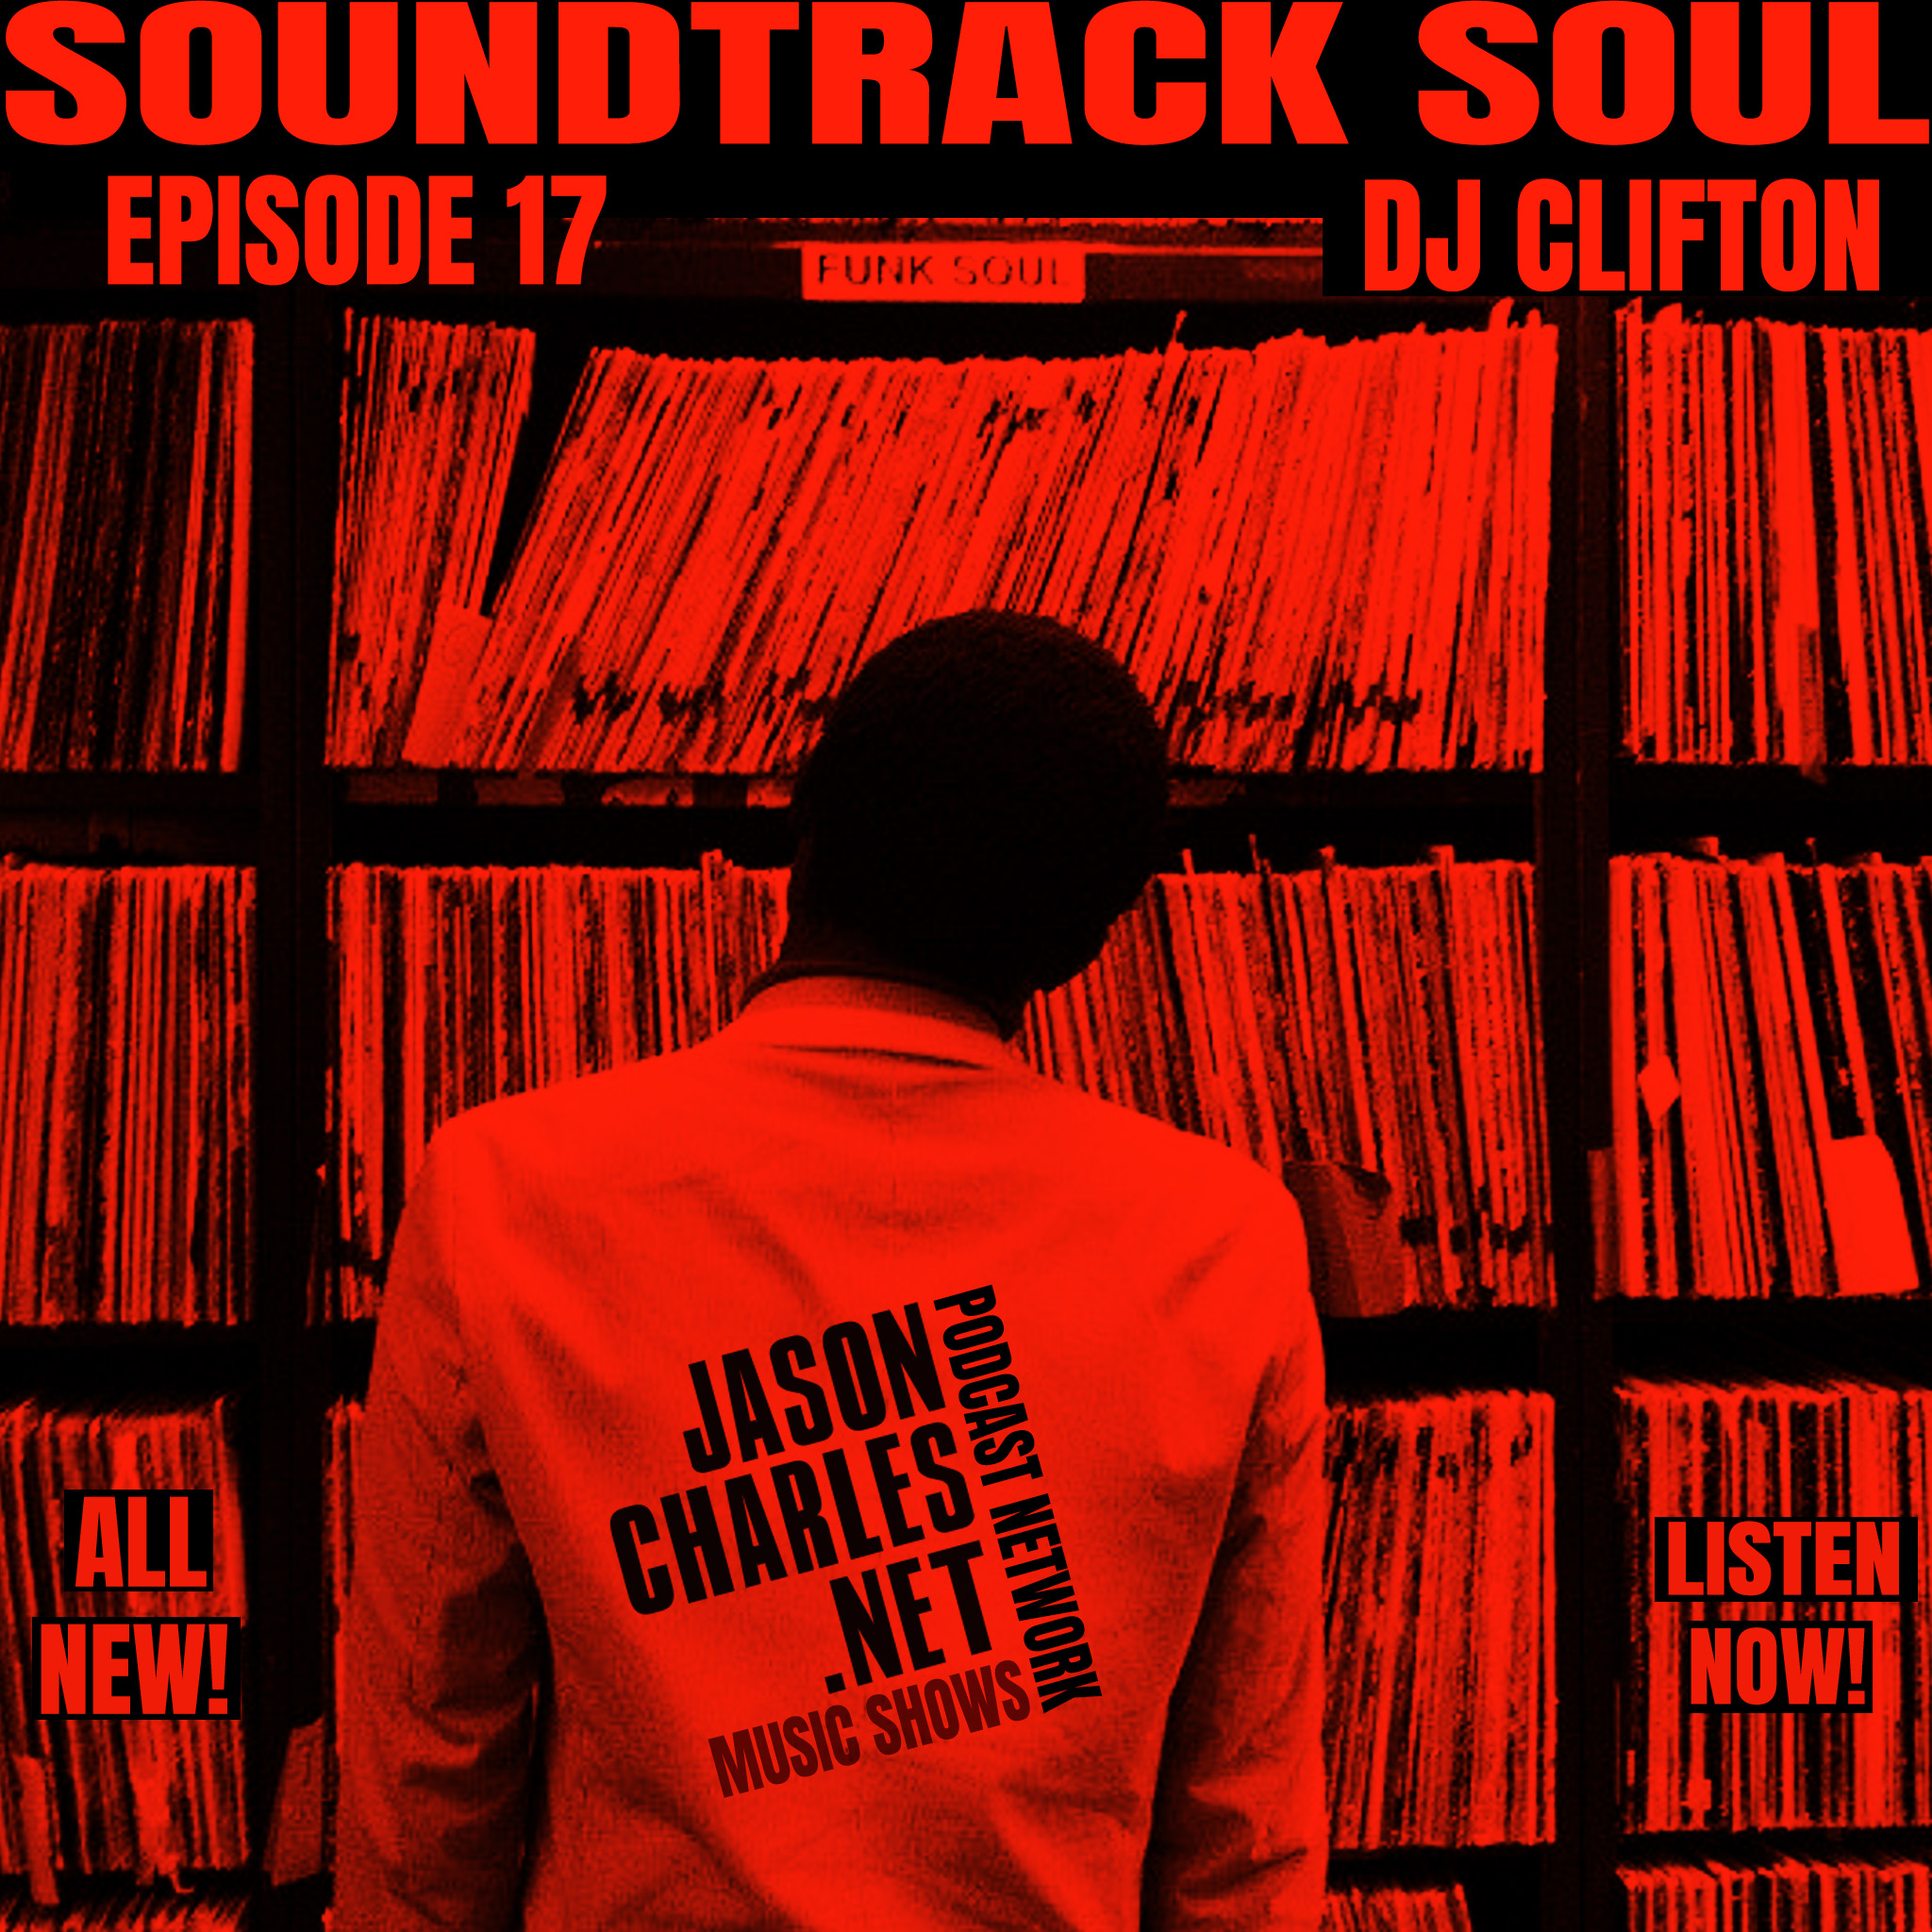 SOUNDTRACK SOUL Episode 17 DJ CLIFTON's Psychedelic Rock & Soul Selections